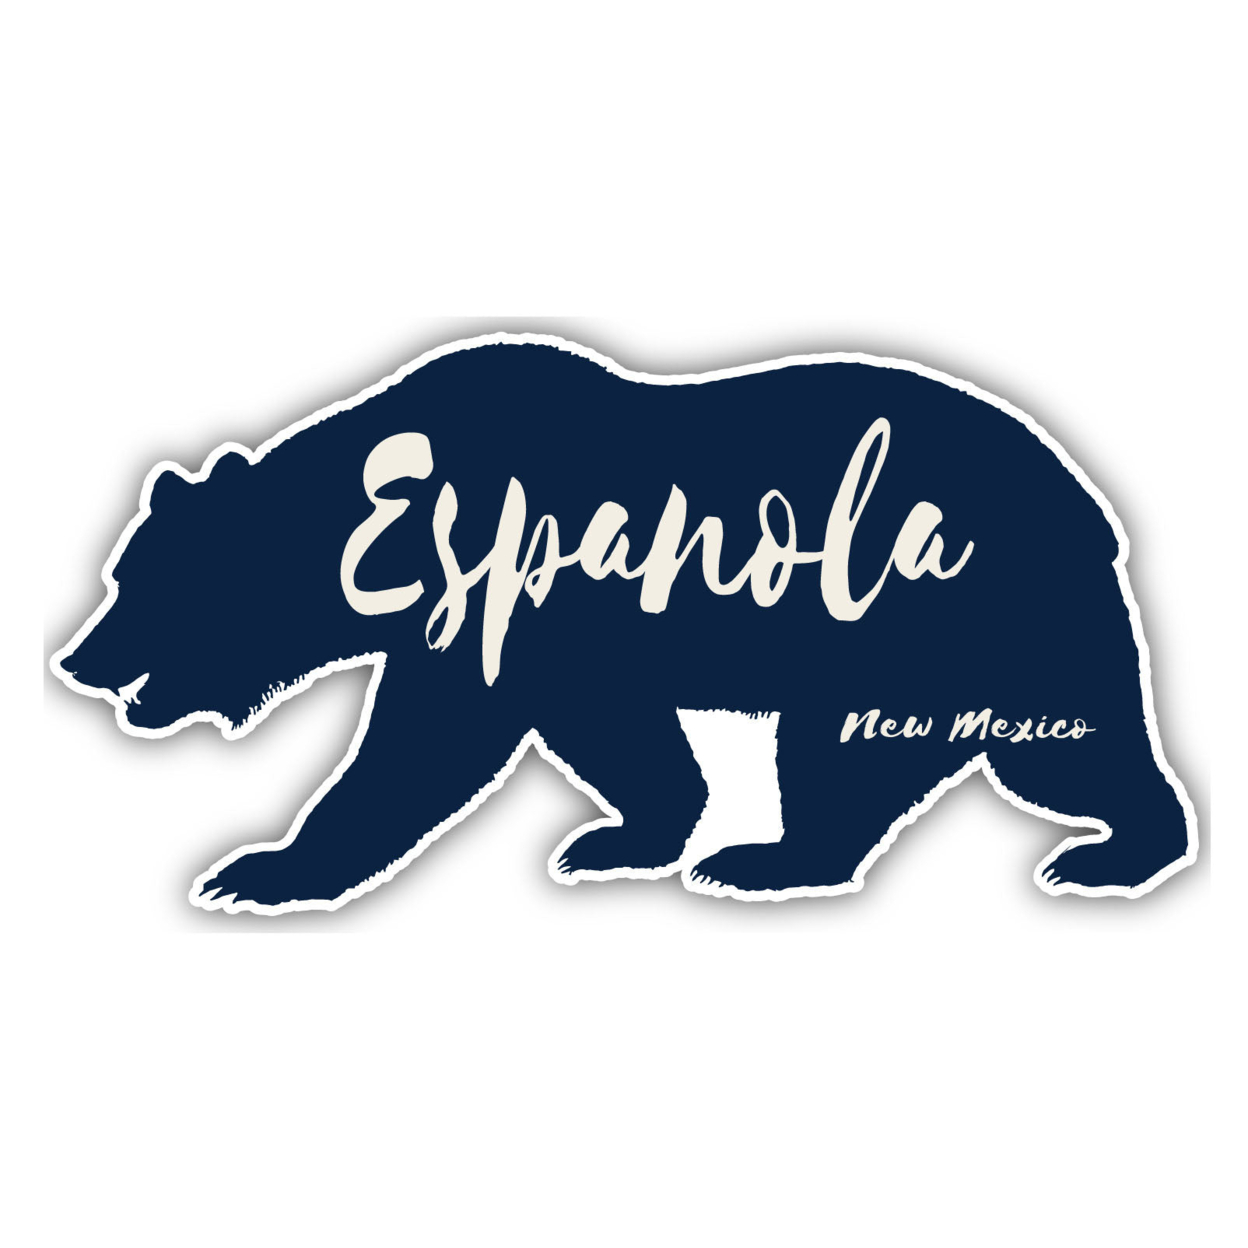 Espanola New Mexico Souvenir Decorative Stickers (Choose Theme And Size) - Single Unit, 8-Inch, Bear